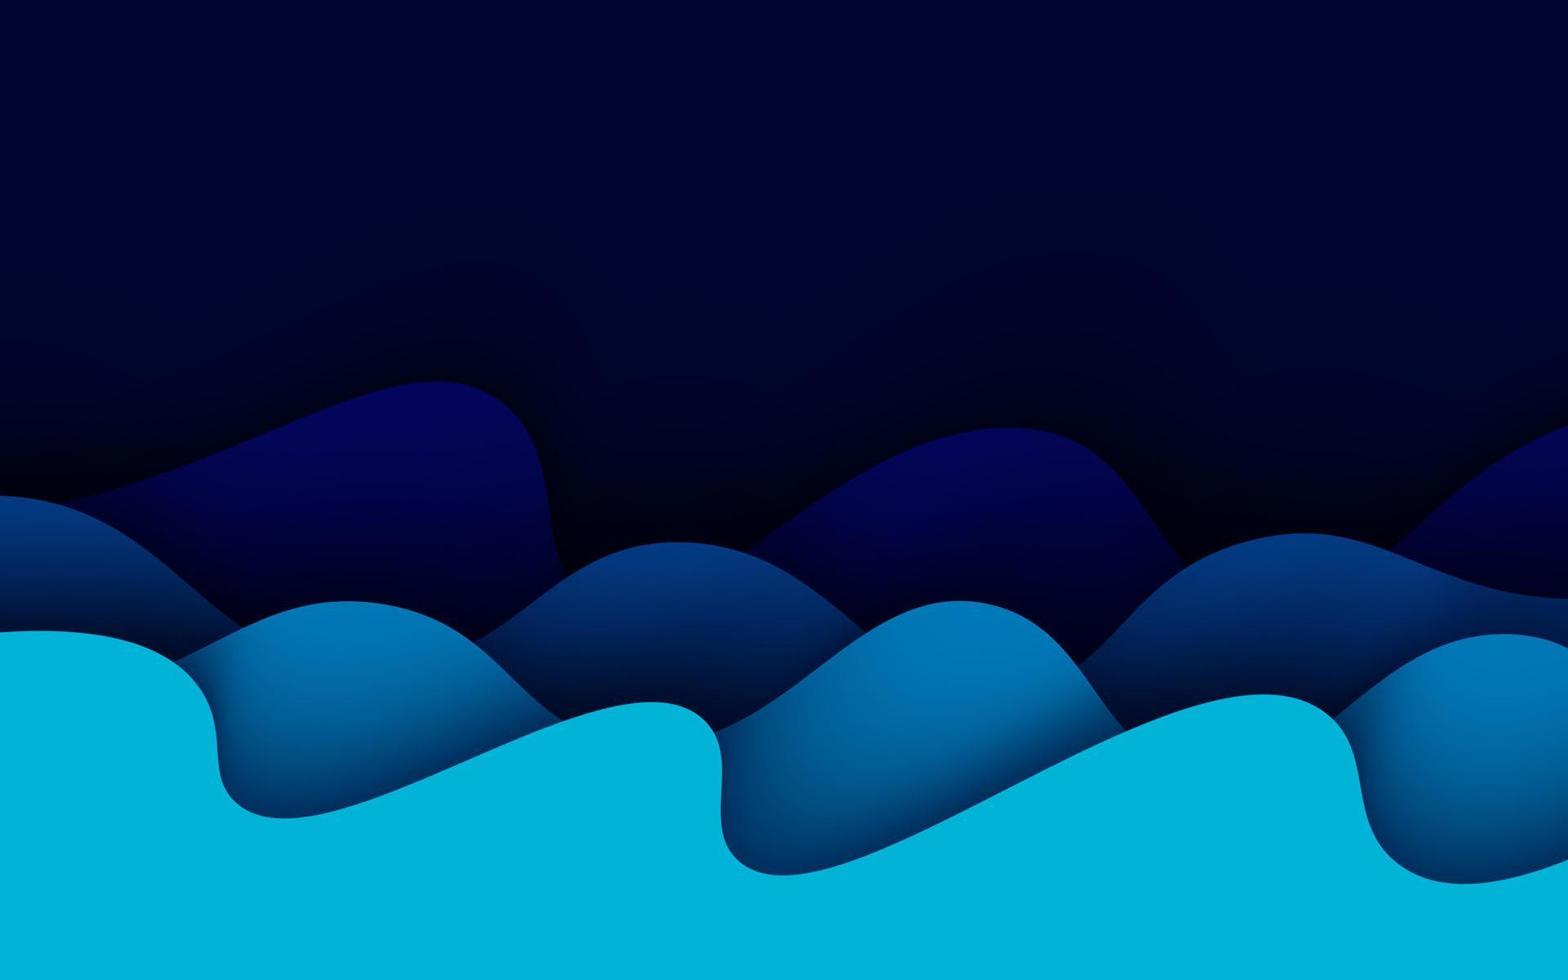 capas de corte de papel 3d de textura azul de múltiples capas en banner de vector degradado. diseño de fondo de arte de corte de papel abstracto para plantilla de sitio web. concepto de mapa topográfico o corte de papel de origami suave